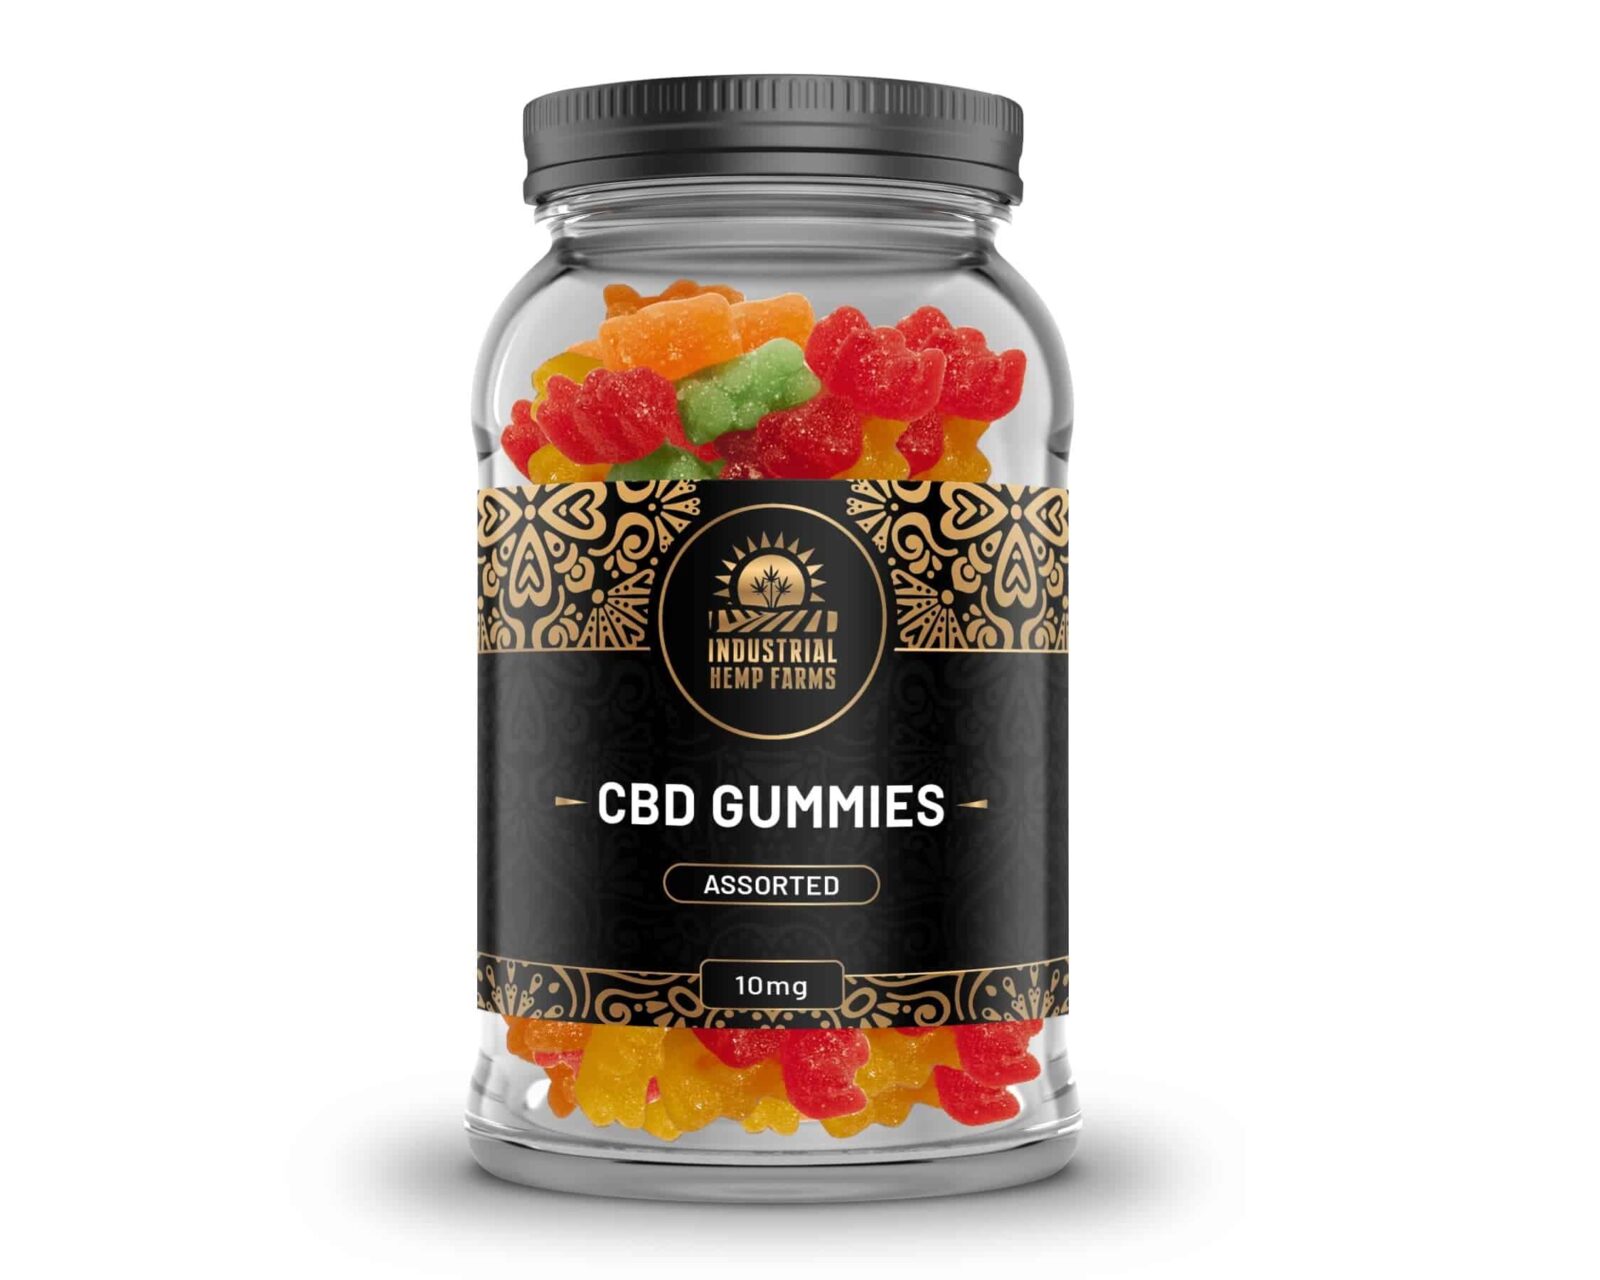 Industrial Hemp Farms CBD Gummies Review